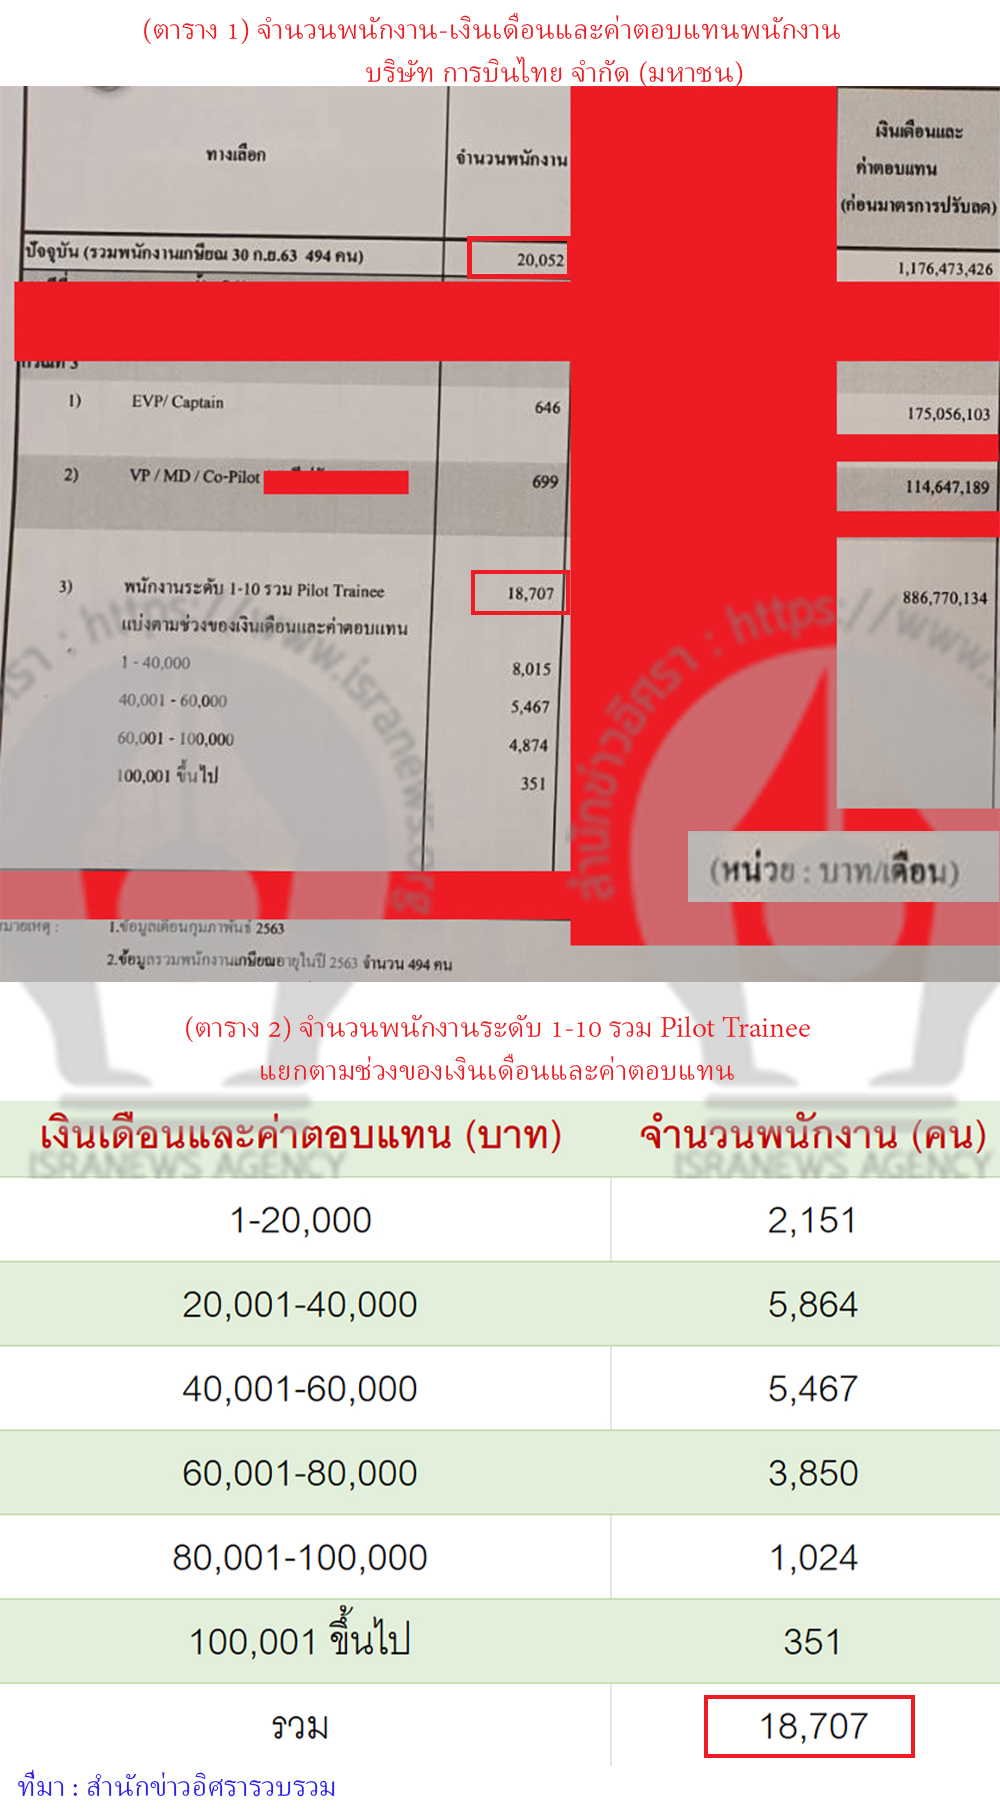 thai 1 pic salary cover pic 07 06 20